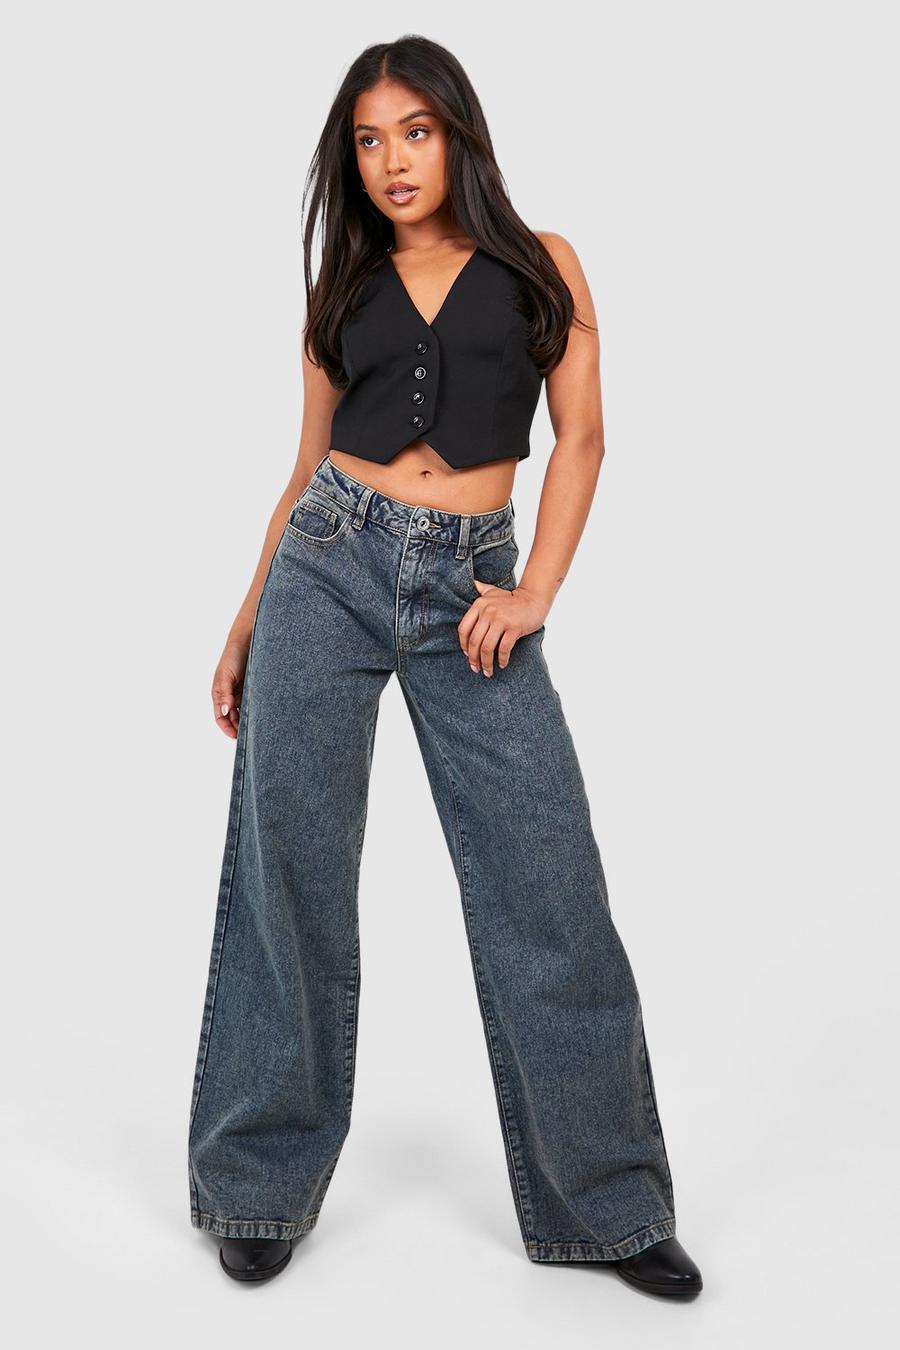 Petite Jeans, Women's Petite Jeans